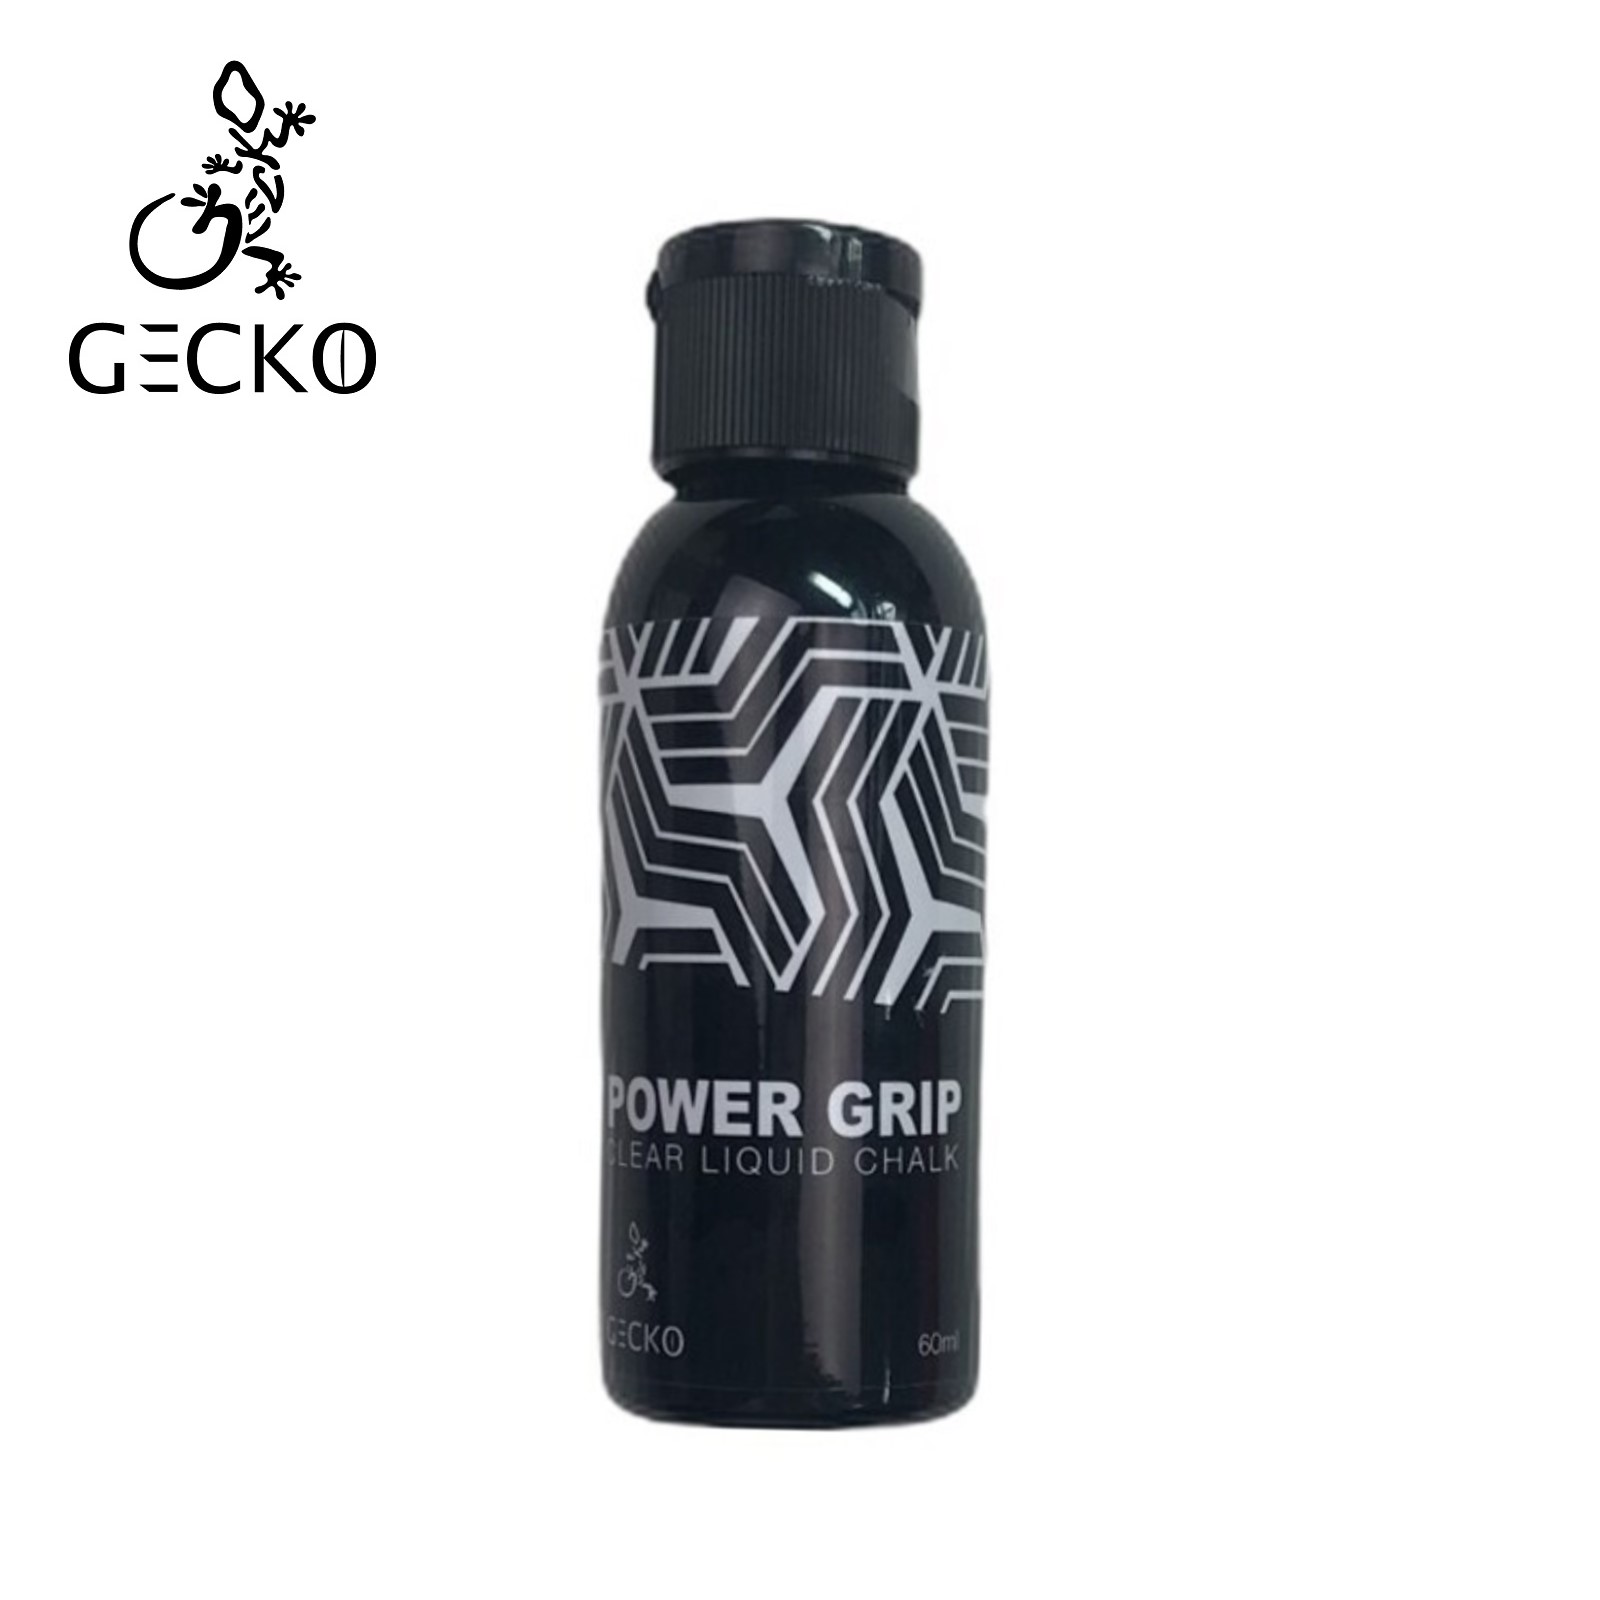 【 GECKO POWER GRIP 60ml 】 チョーク リキッド/下地 チョーク下地 液体 液チョー クライミングギア ..